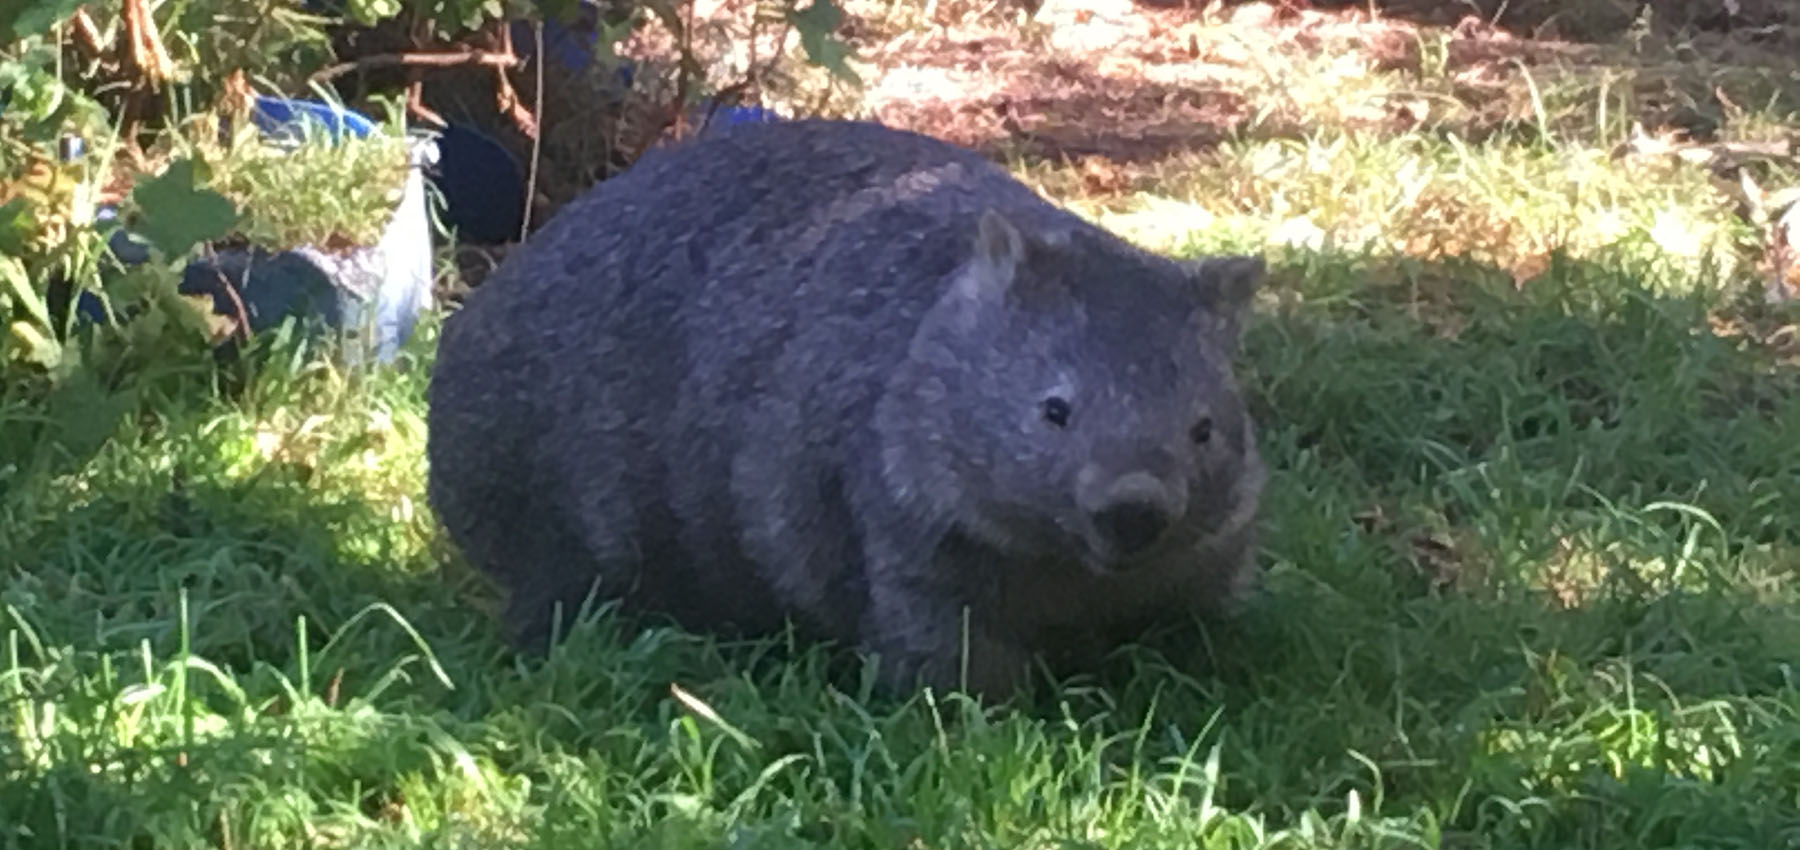 wombat conservation news